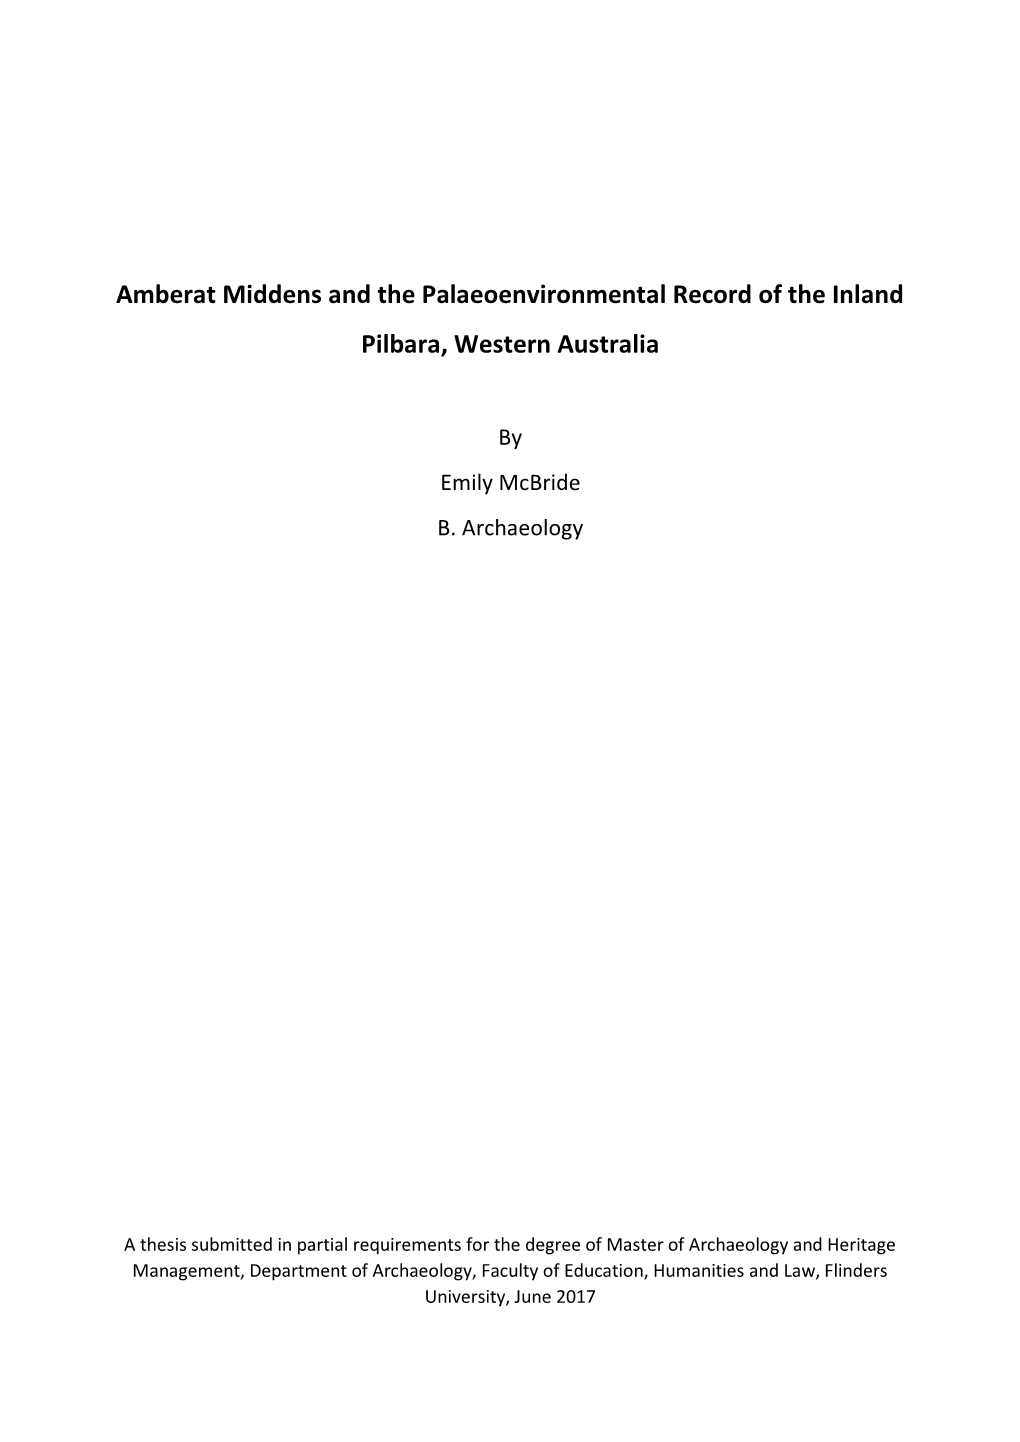 Amberat Middens and the Palaeoenvironmental Record of the Inland Pilbara, Western Australia